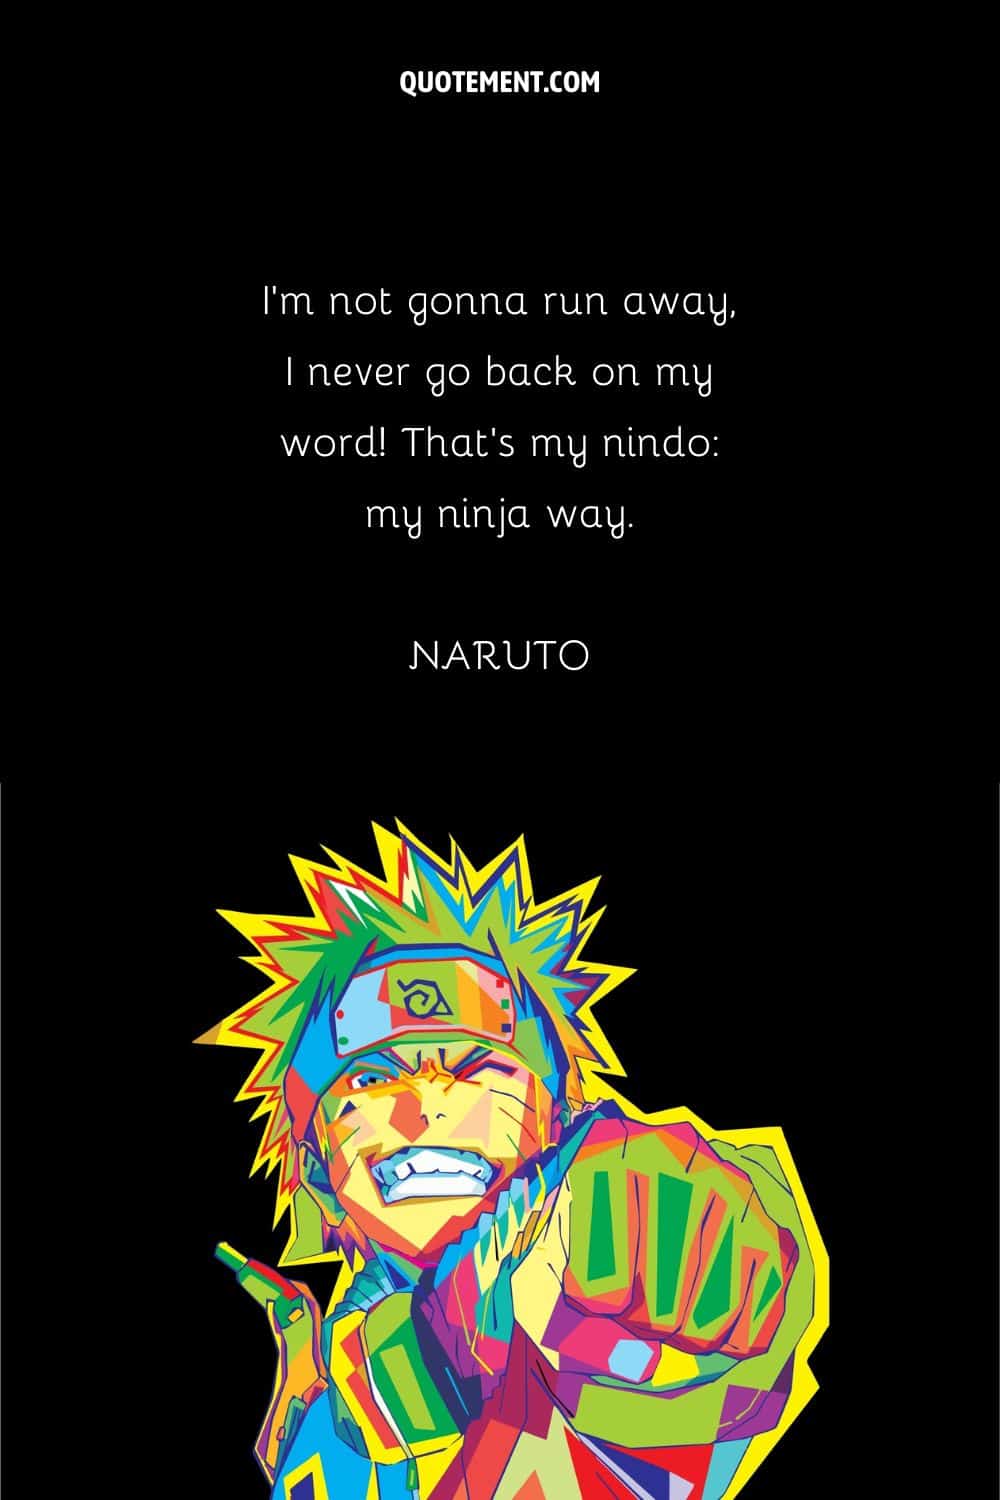 colorful Naruto image representing remarkable Naruto quote